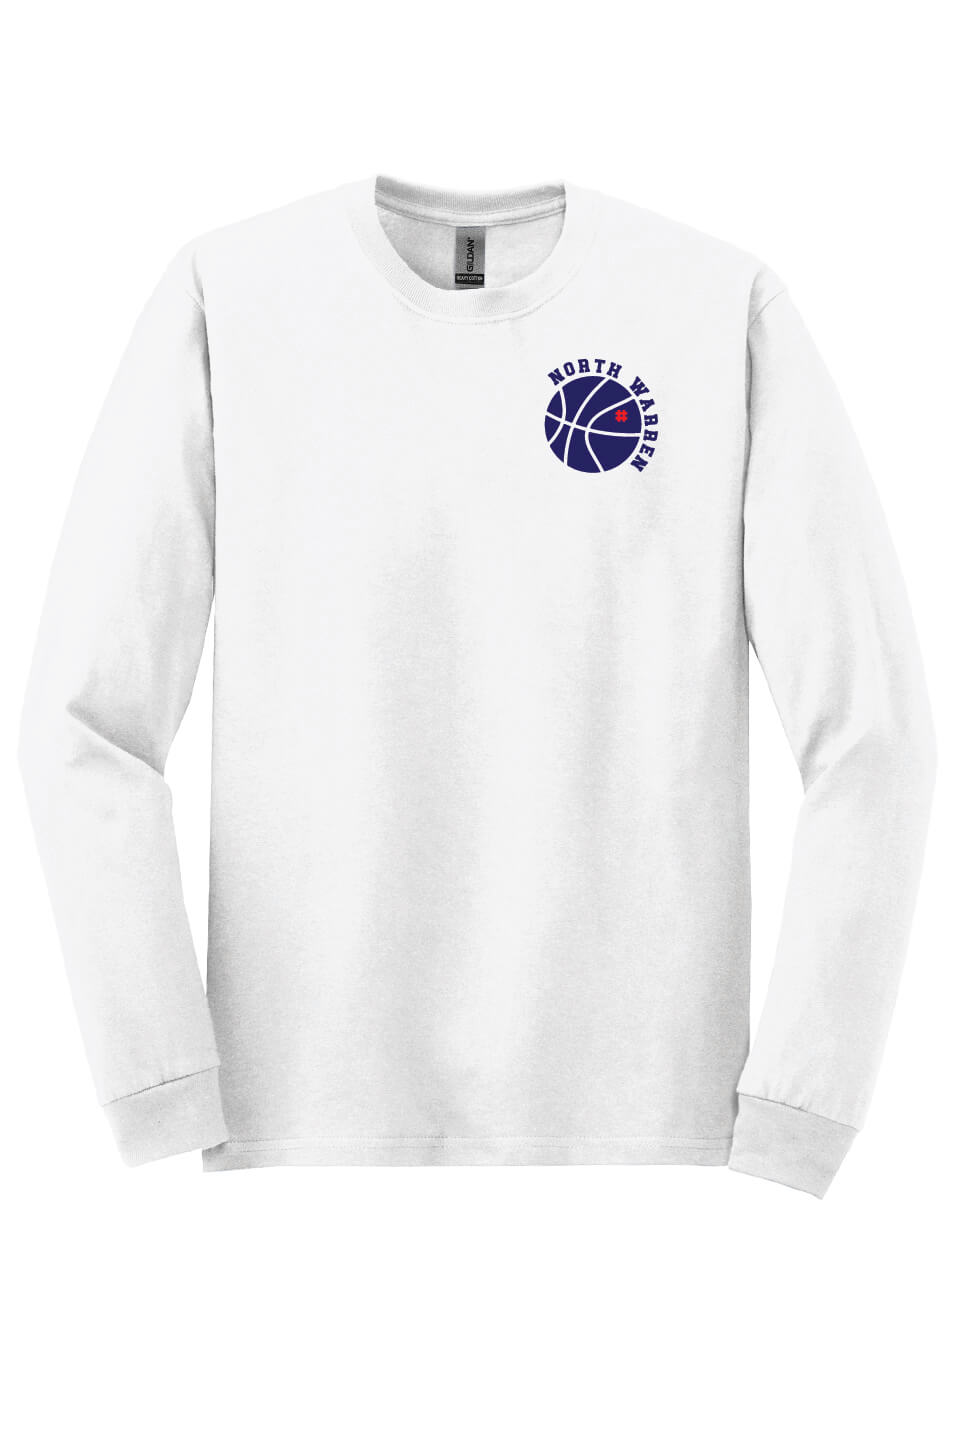 North Warren Basketball Long Sleeve T-Shirt (Youth) white